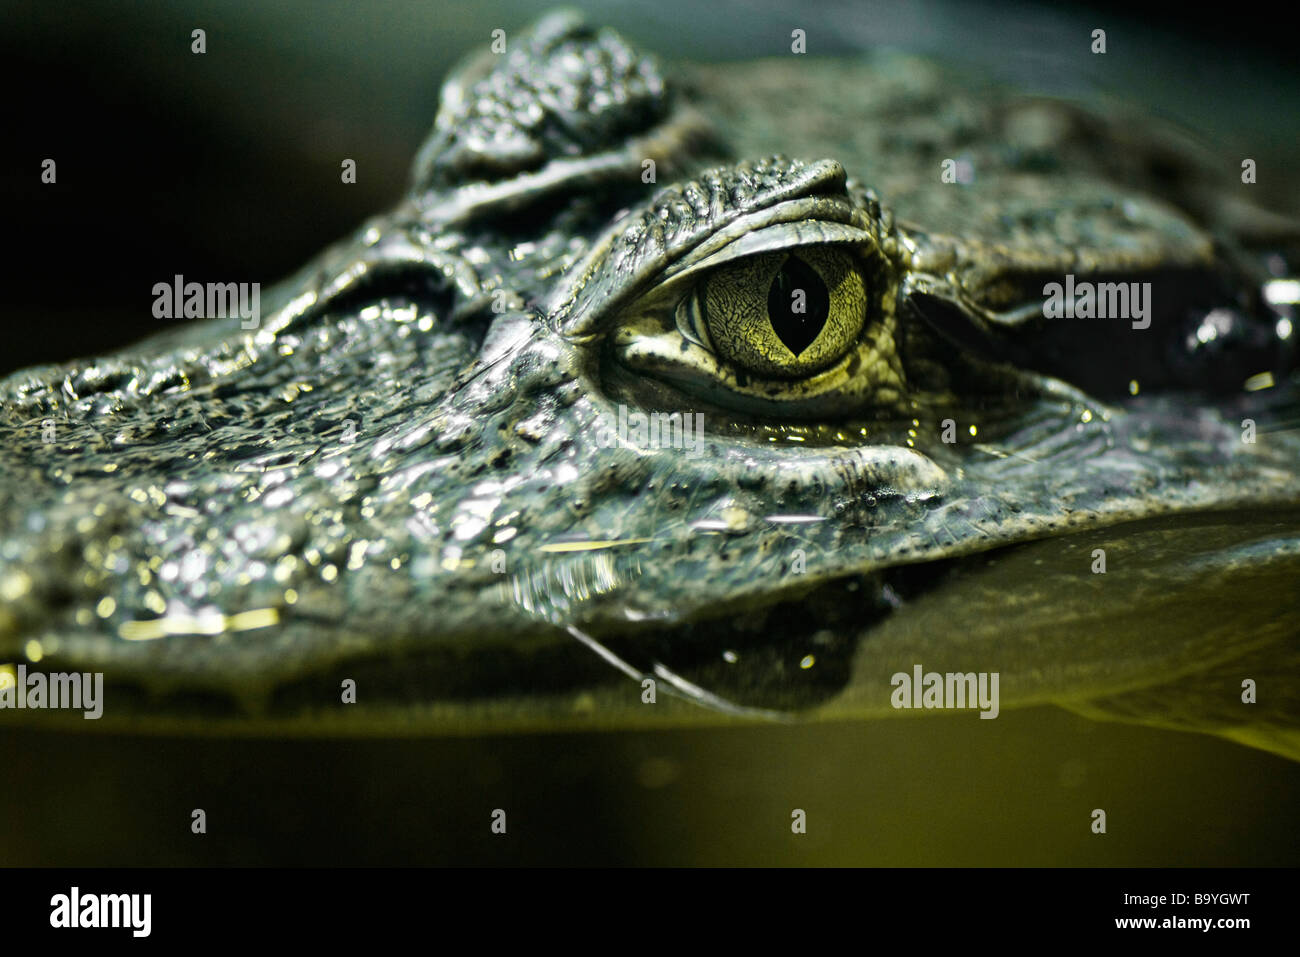 Caiman (Crocodilus yacare) Stock Photo